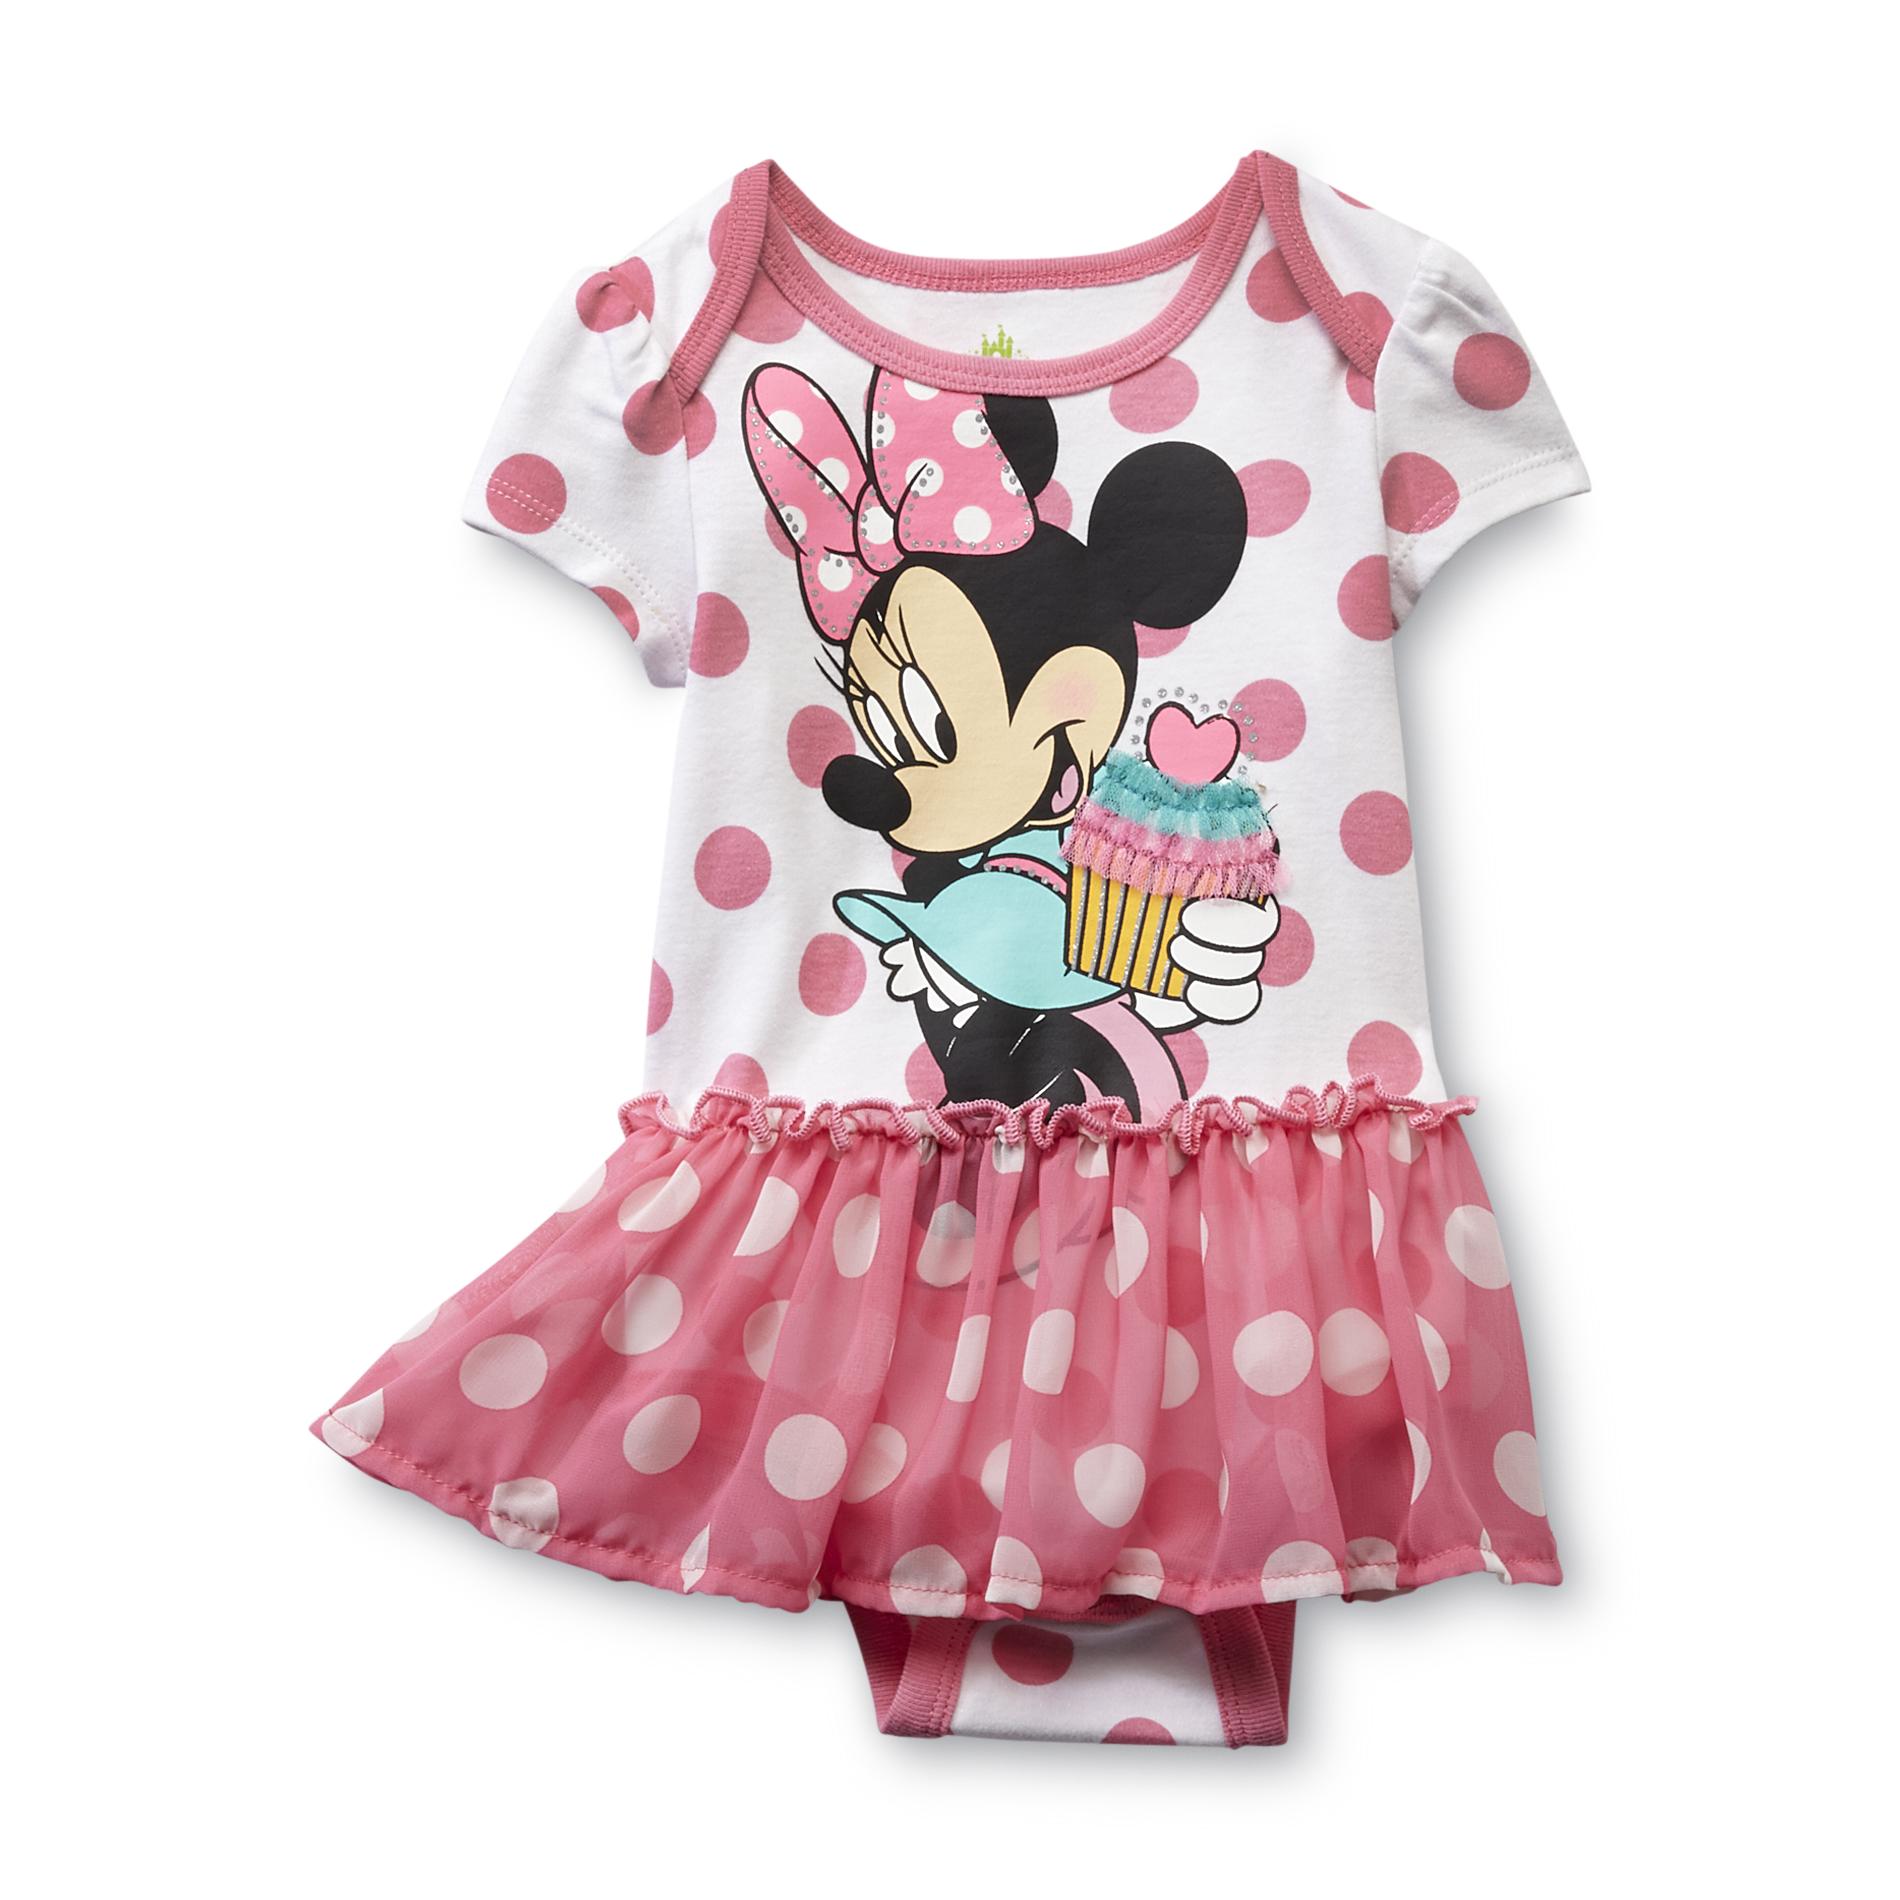 Disney Newborn Girl's Bodysuit Tutu Dress - Minnie Mouse